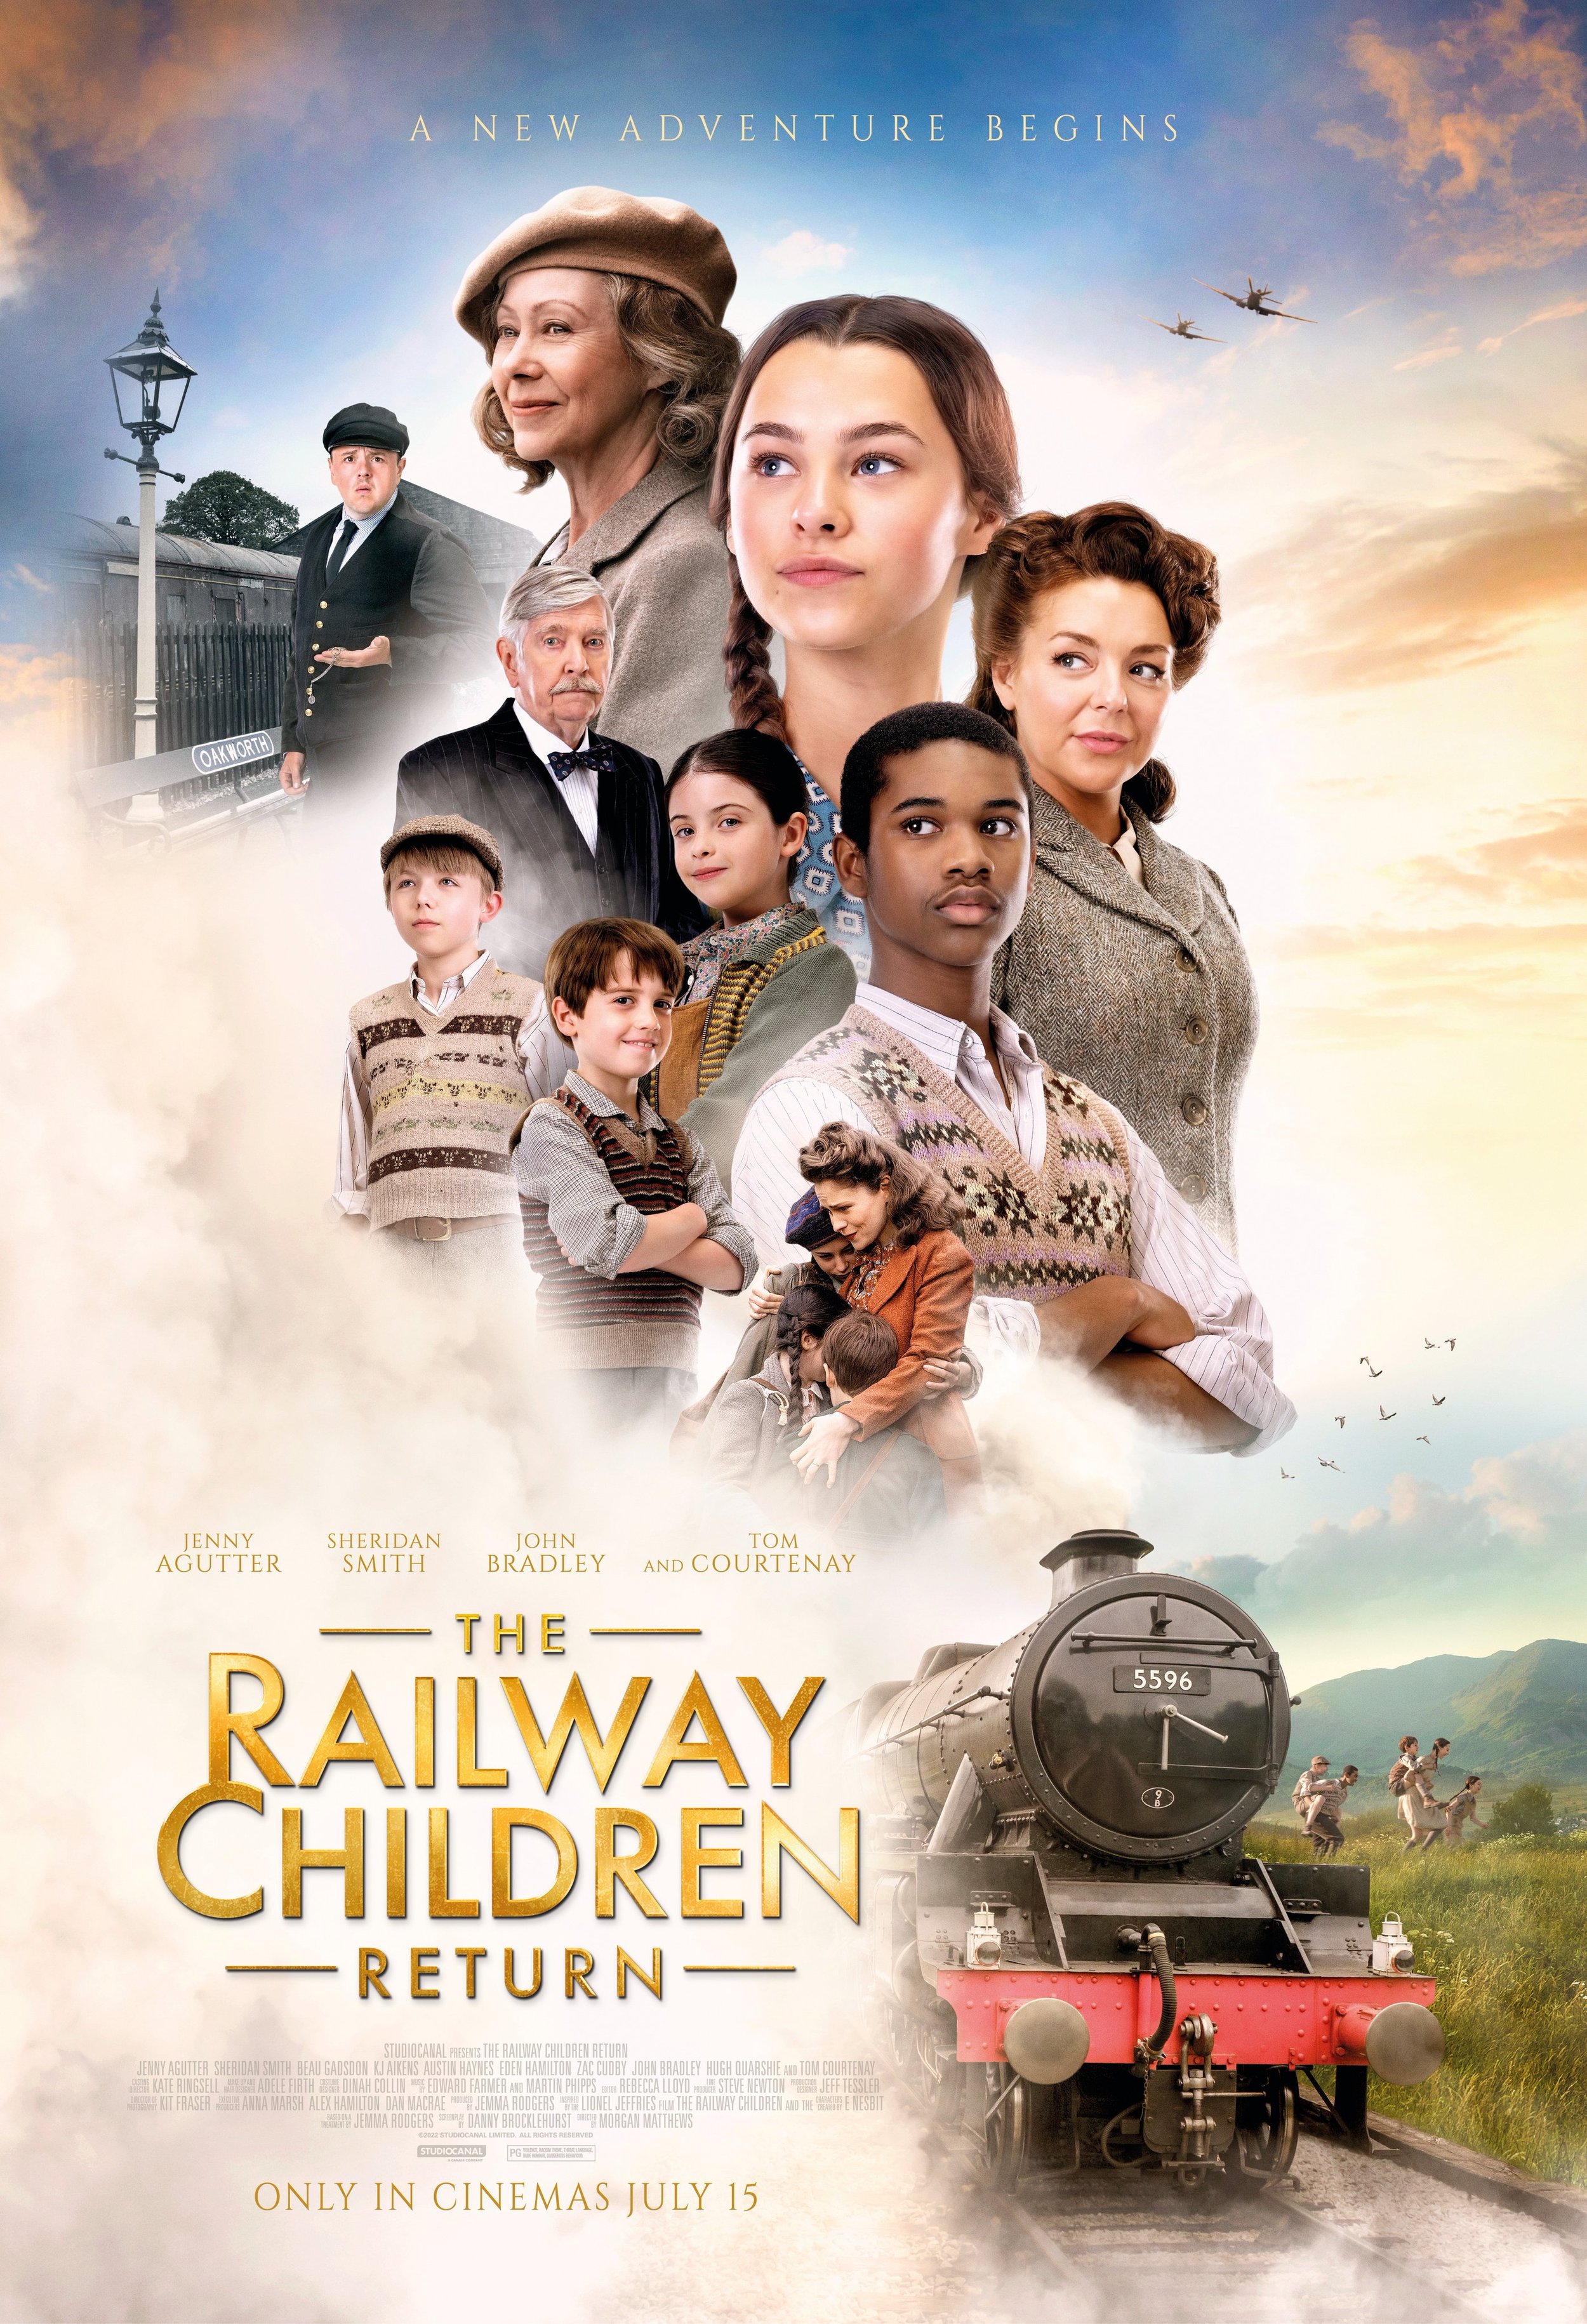 The Railway Children Returns